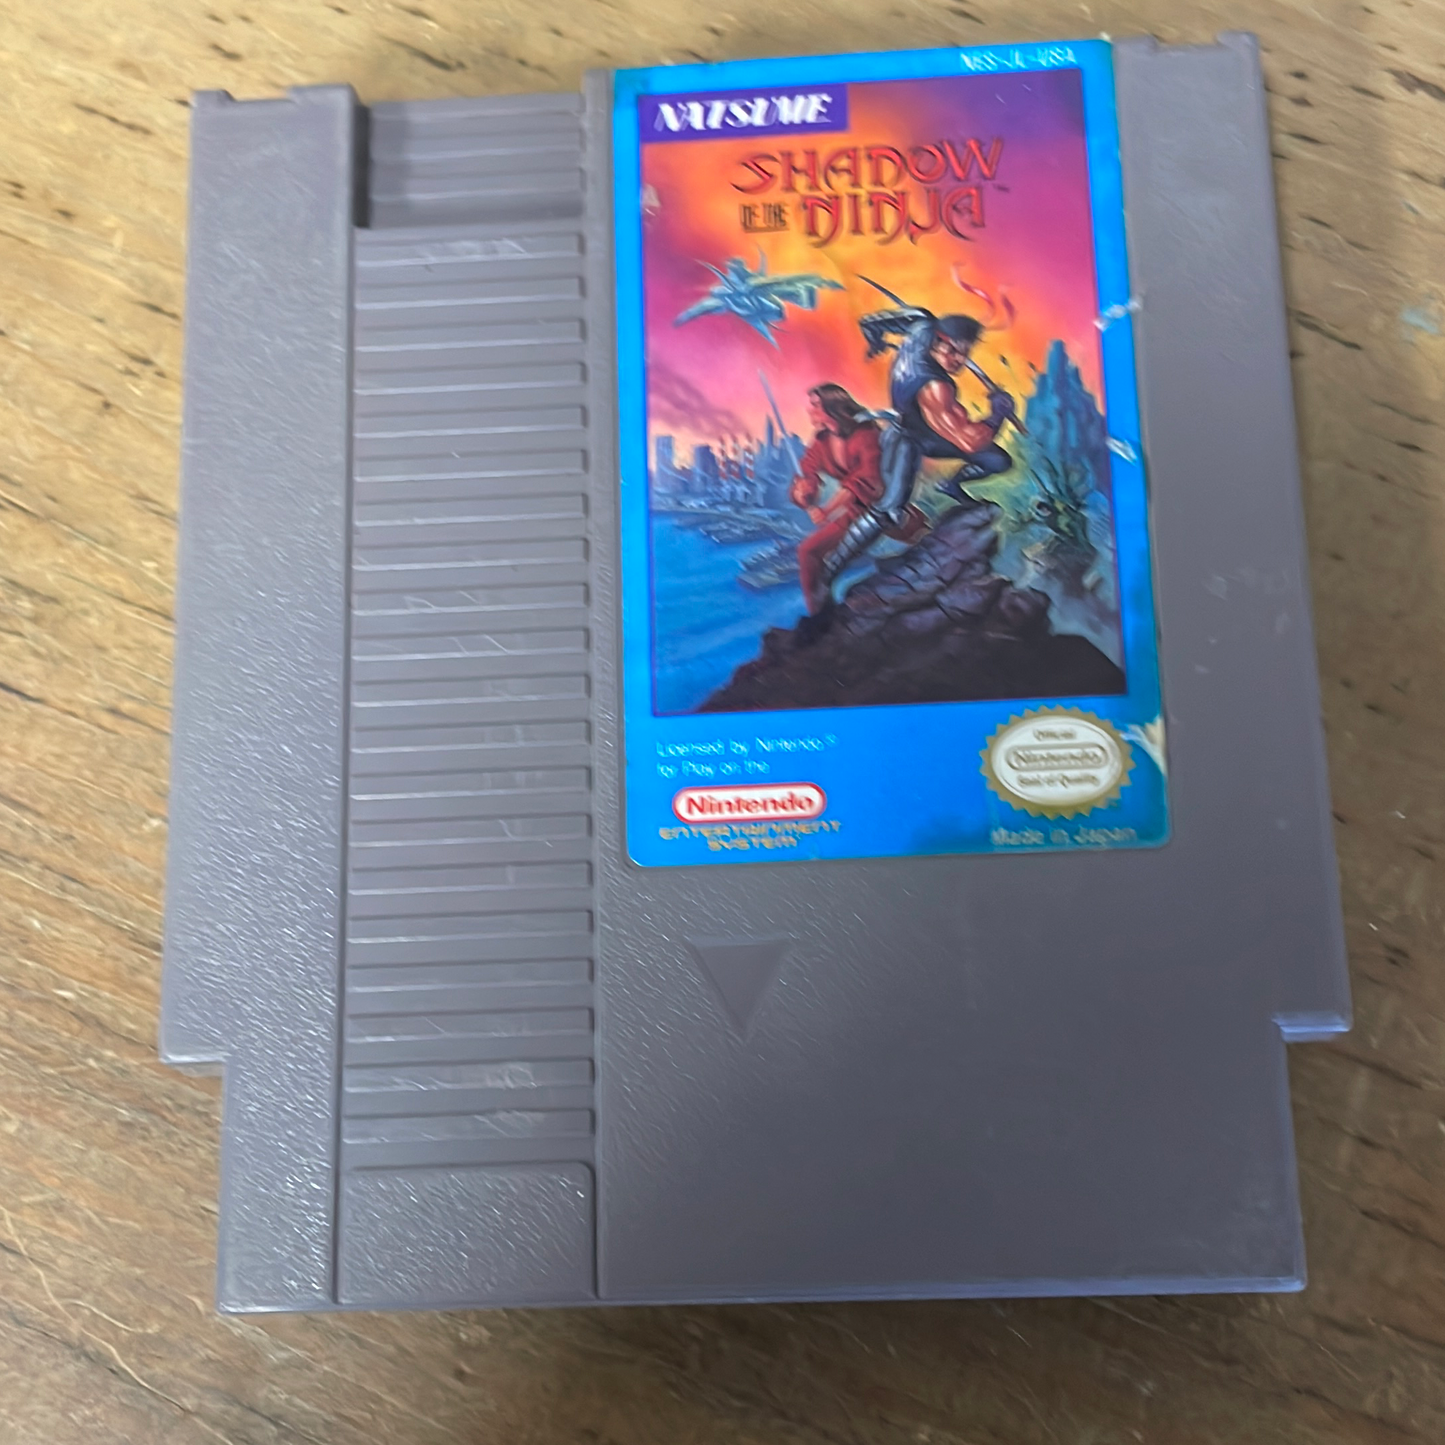 Shadow of the Ninja - NES - 360,463